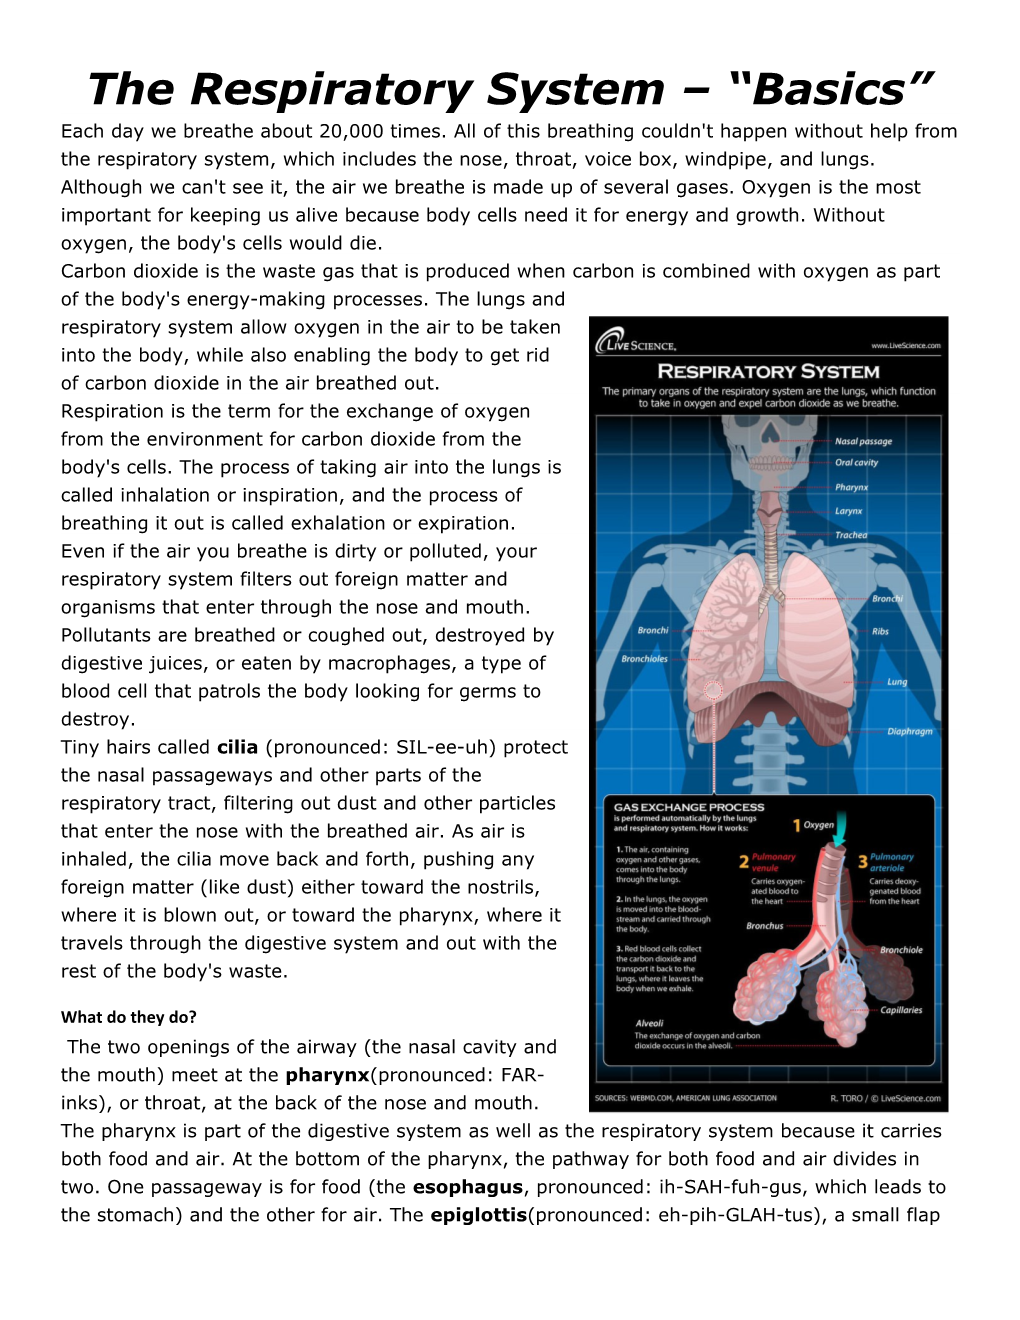 The Respiratory System Basics